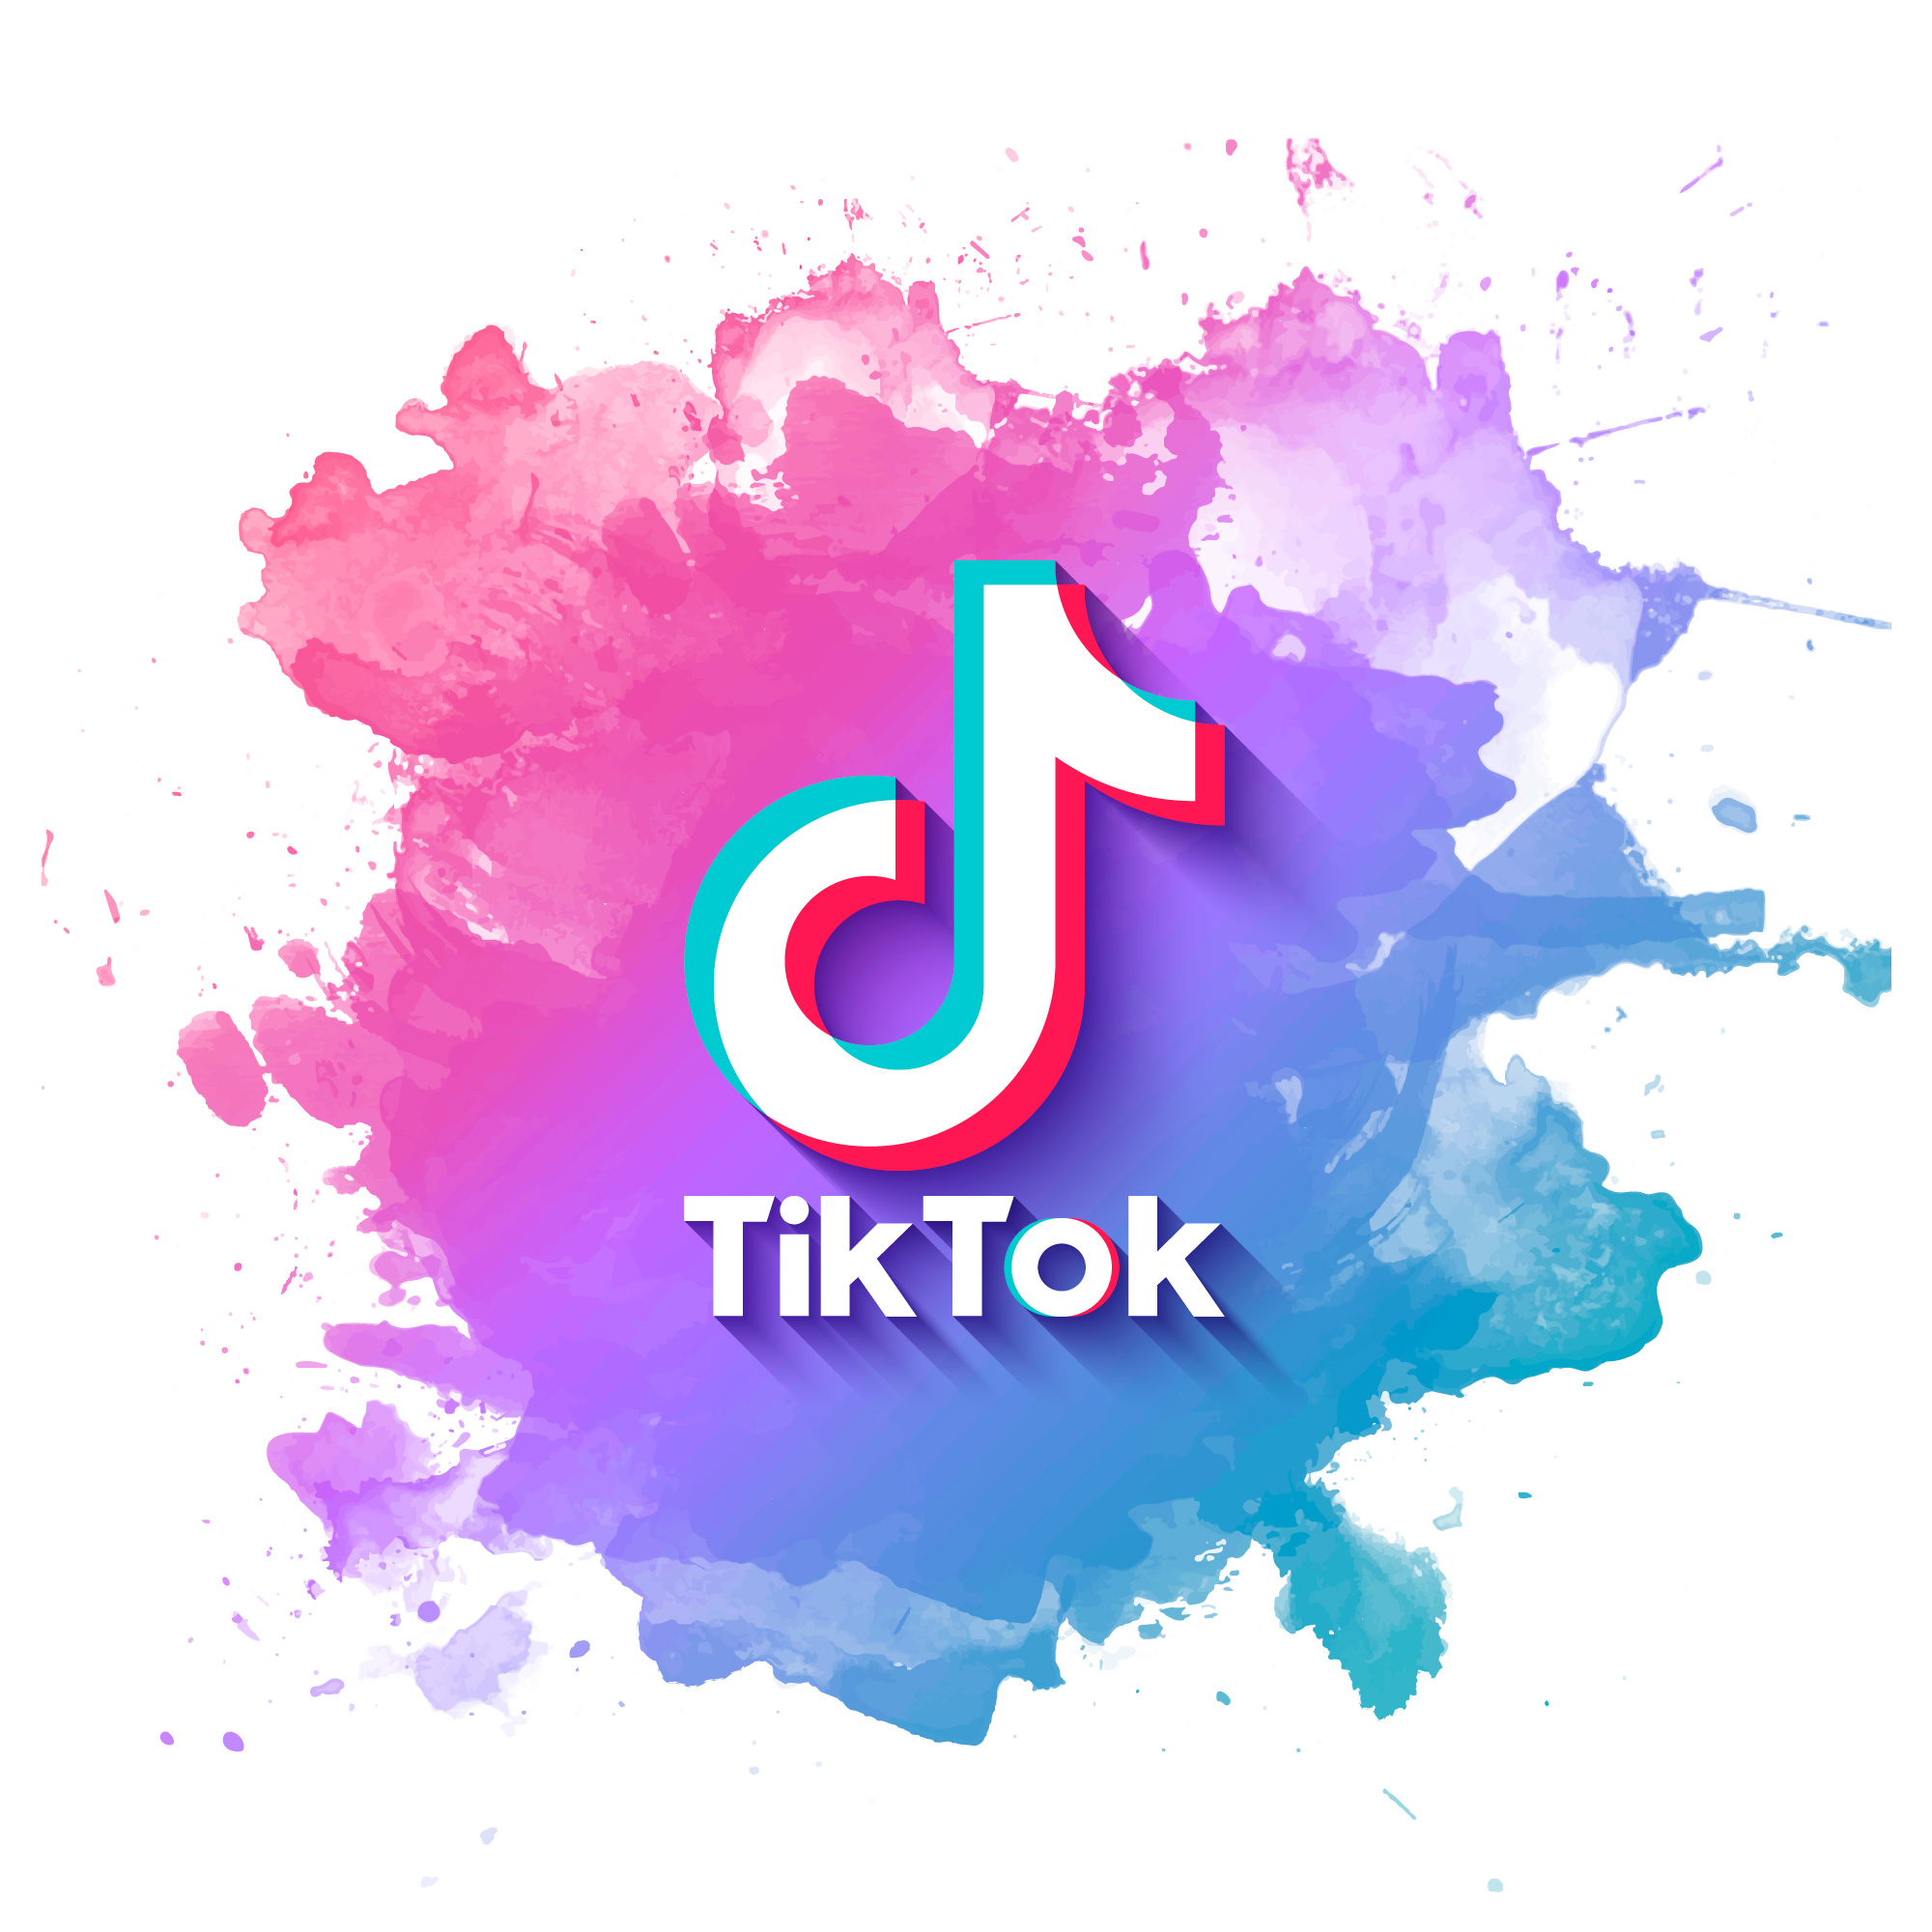 TikTok symbol on a pink and purple background.